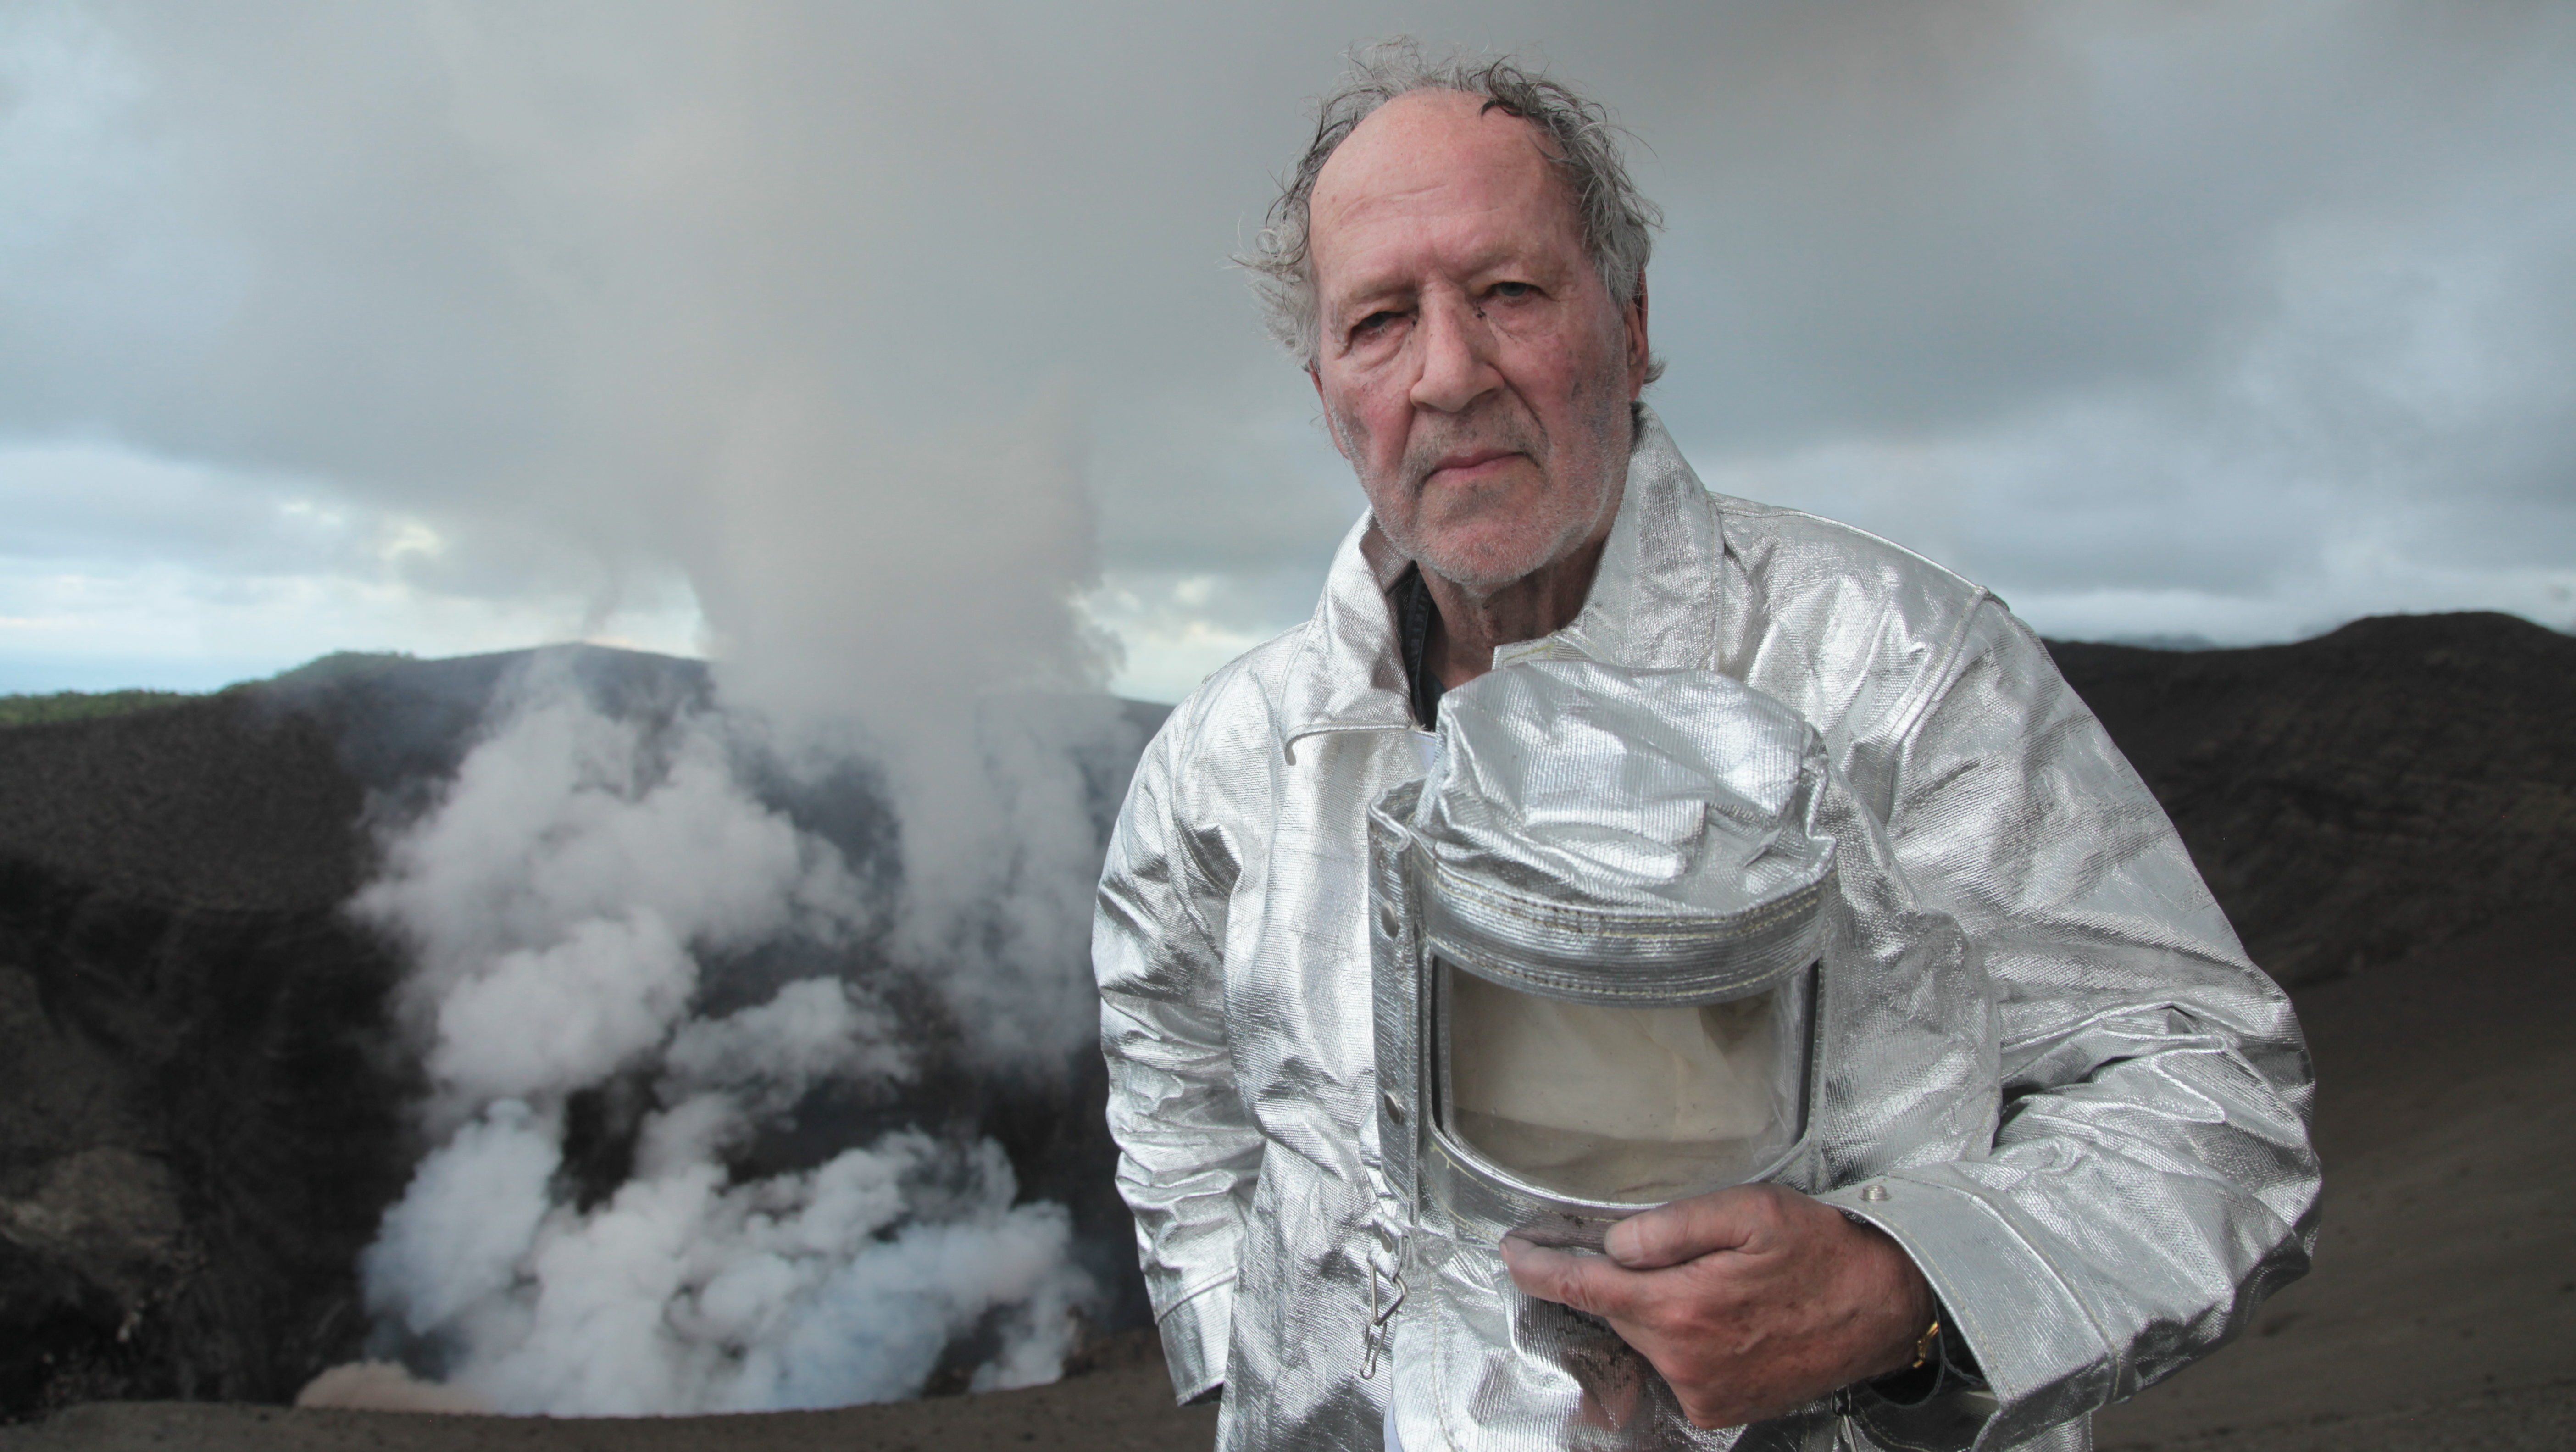 Documentaire. “Into The Inferno” : la promenade volcanique de Werner Herzog